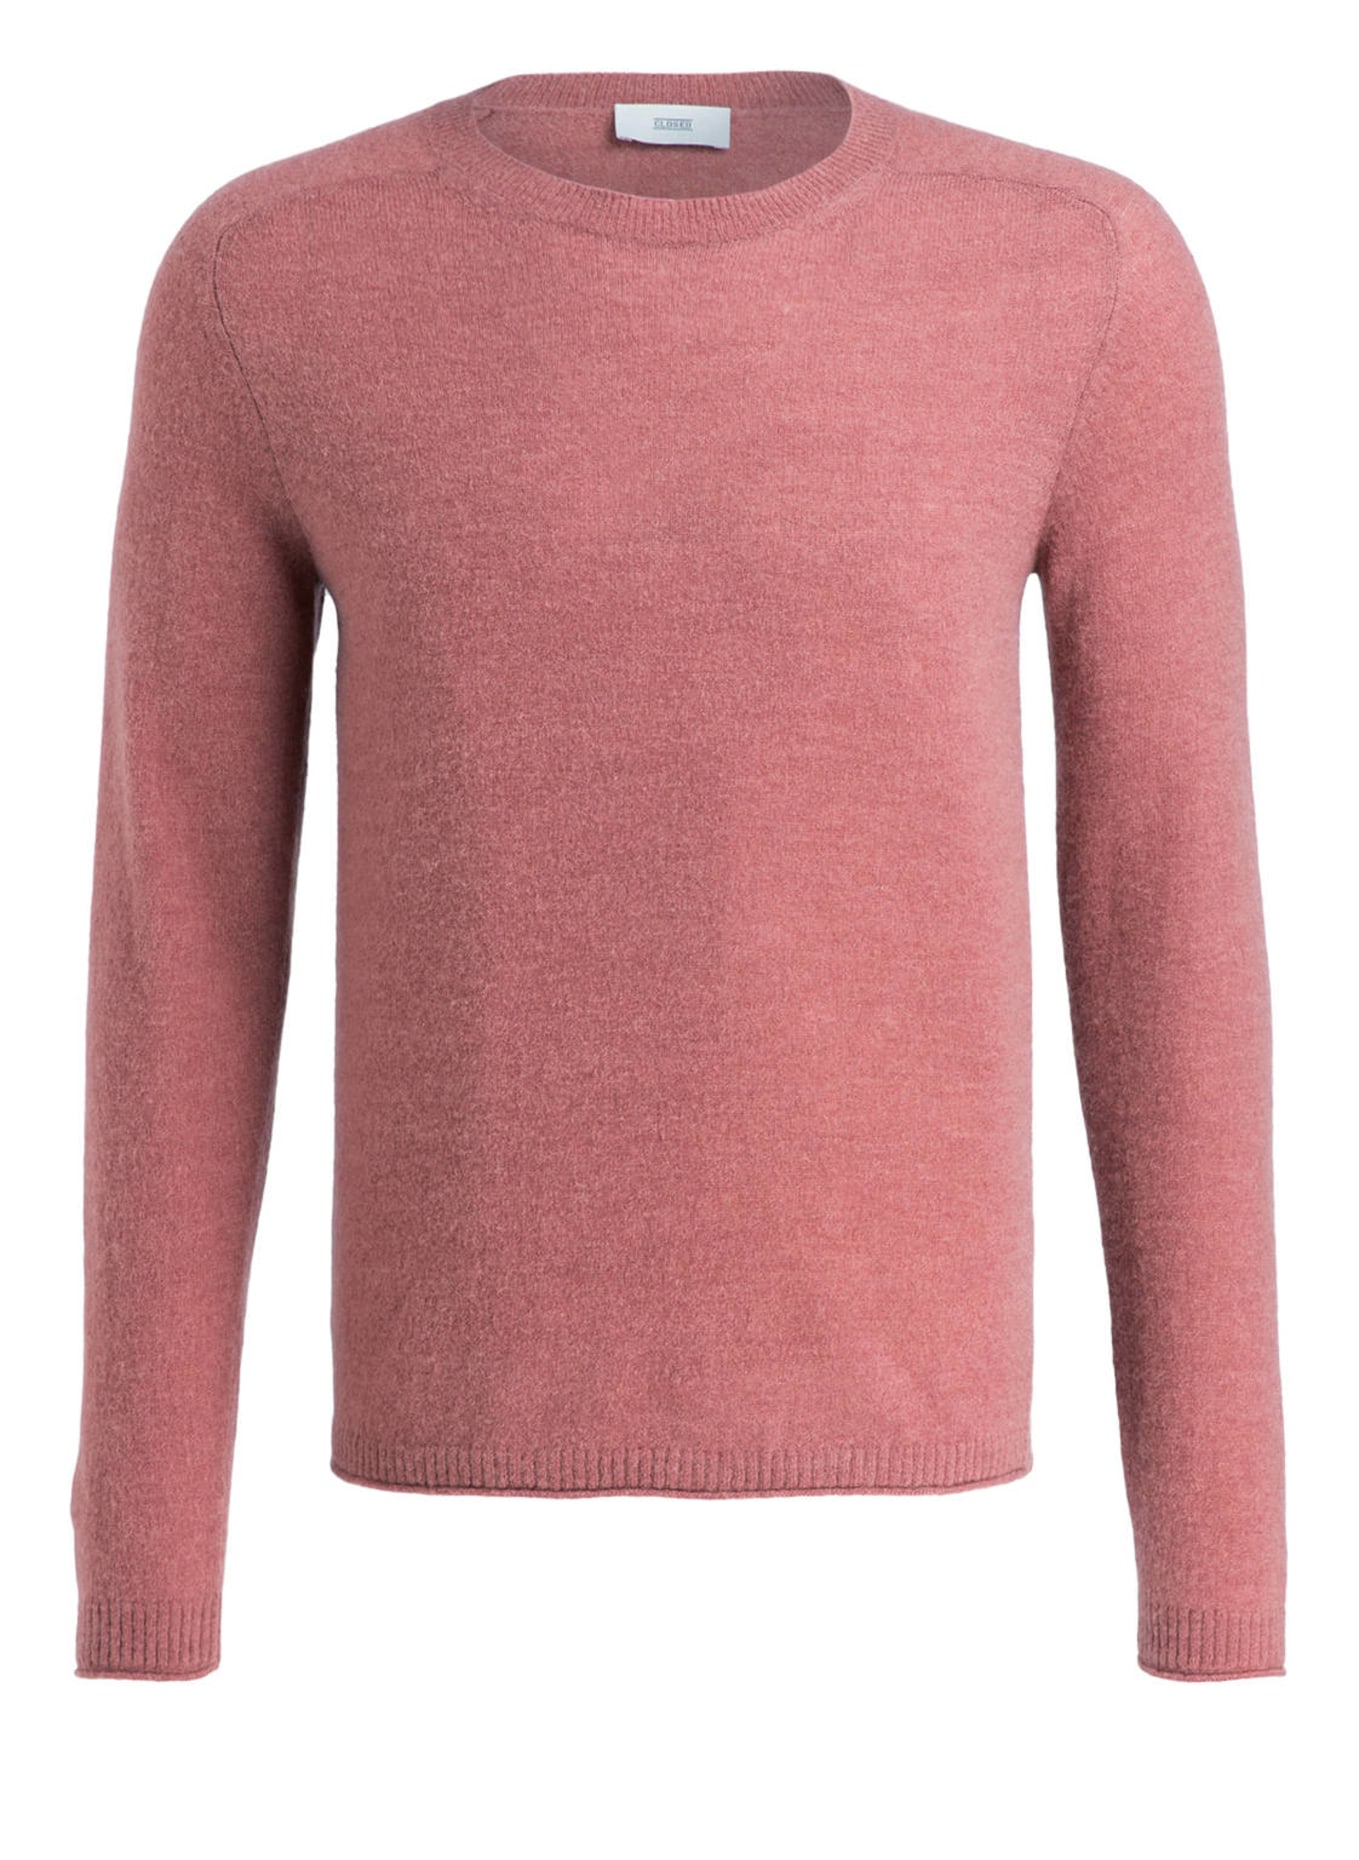 CLOSED Pullover mit Alpaka-Anteil, Farbe: ROSÉ (Bild 1)